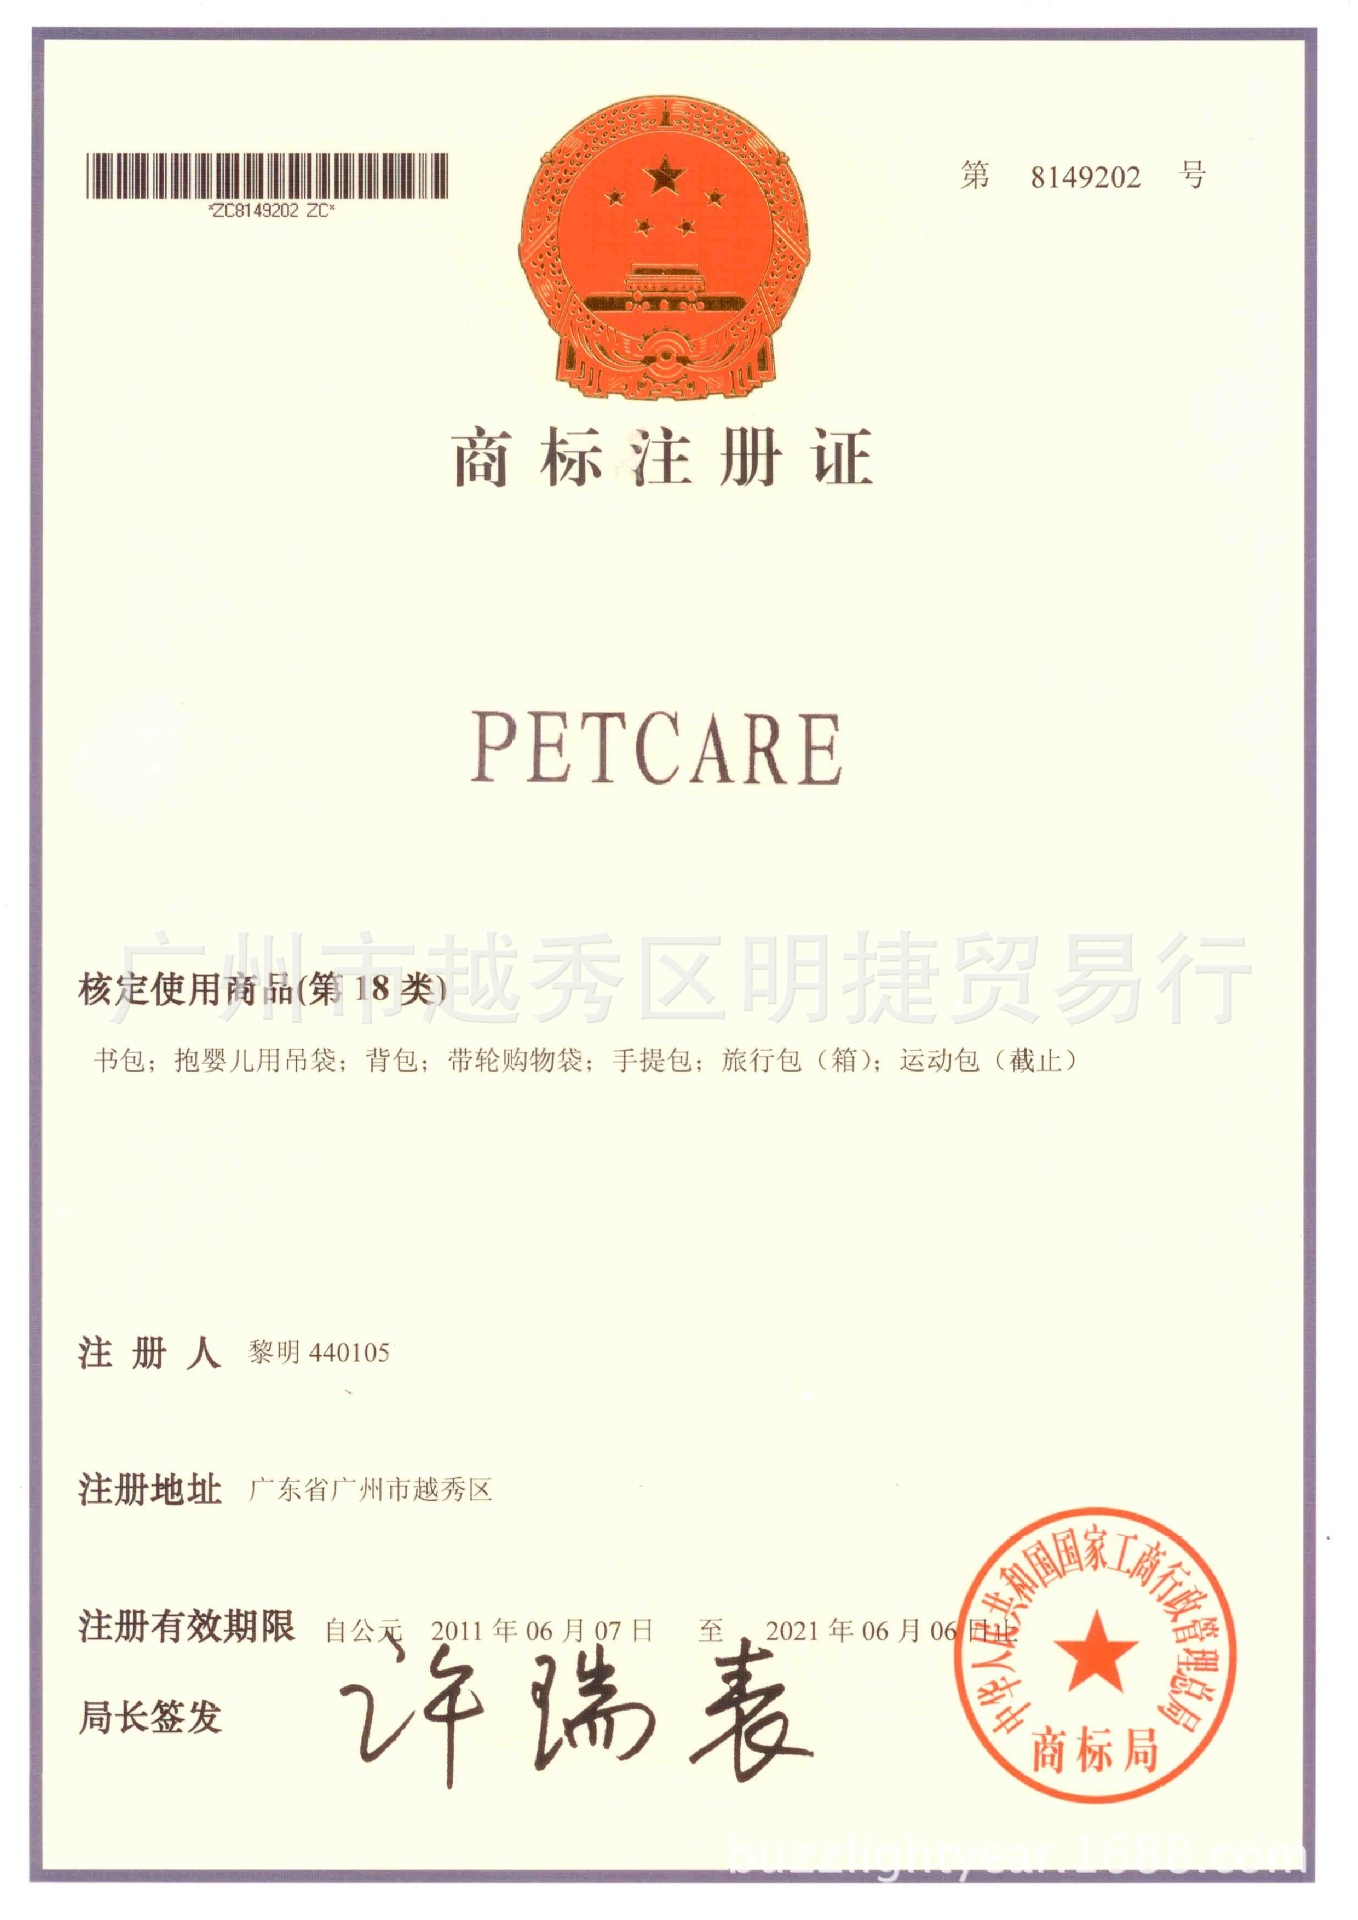 PETCARE商標證書